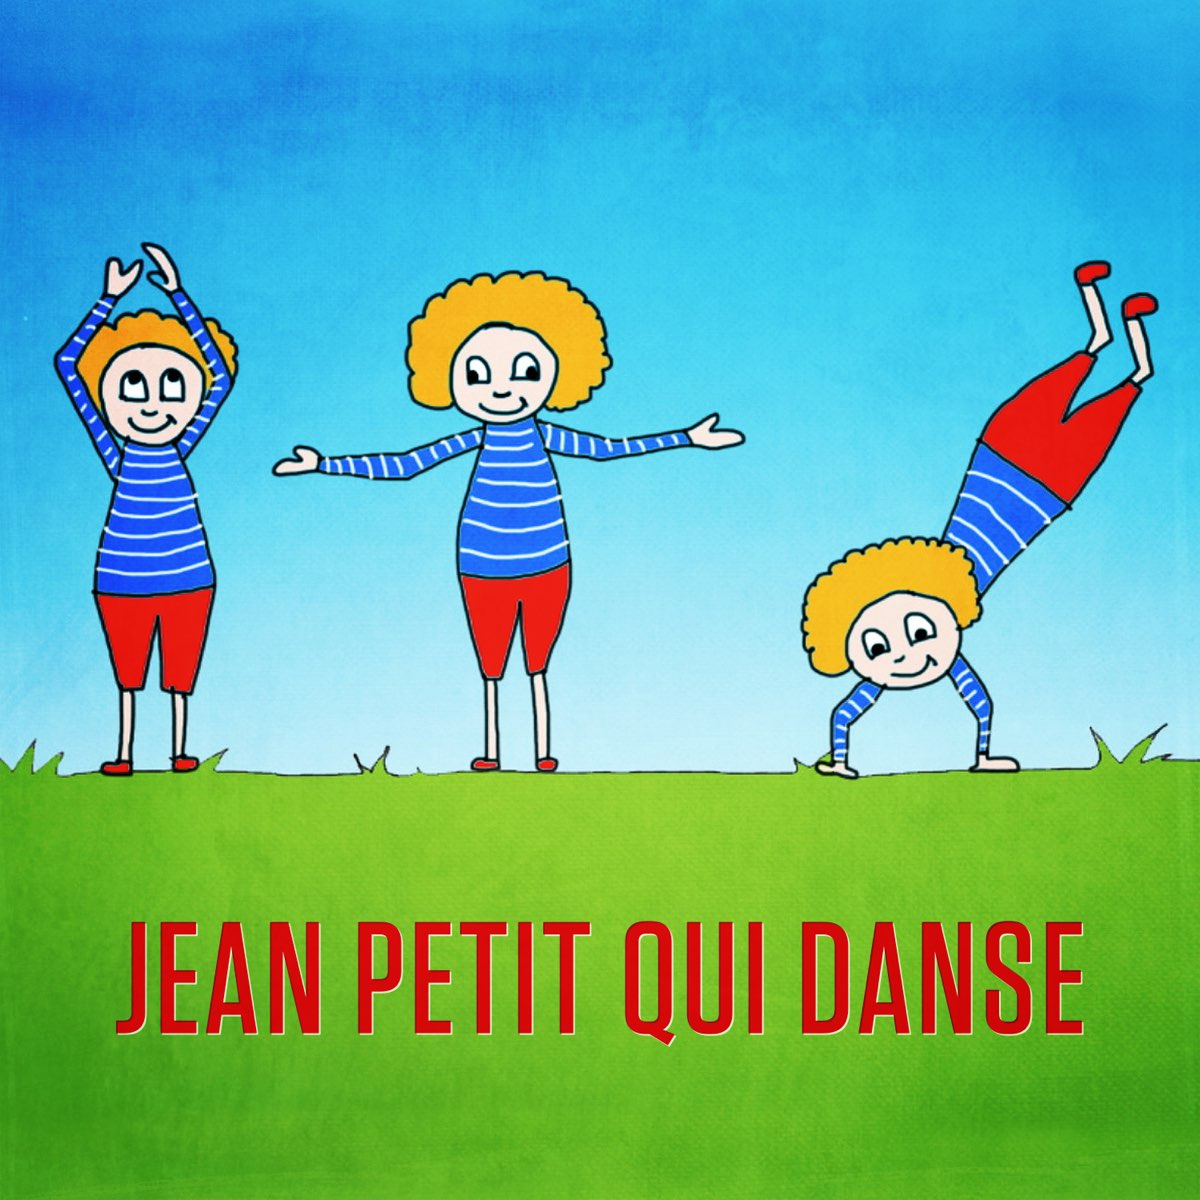 Jean Petit qui danse - Single - Album by Mister Toony - Apple Music